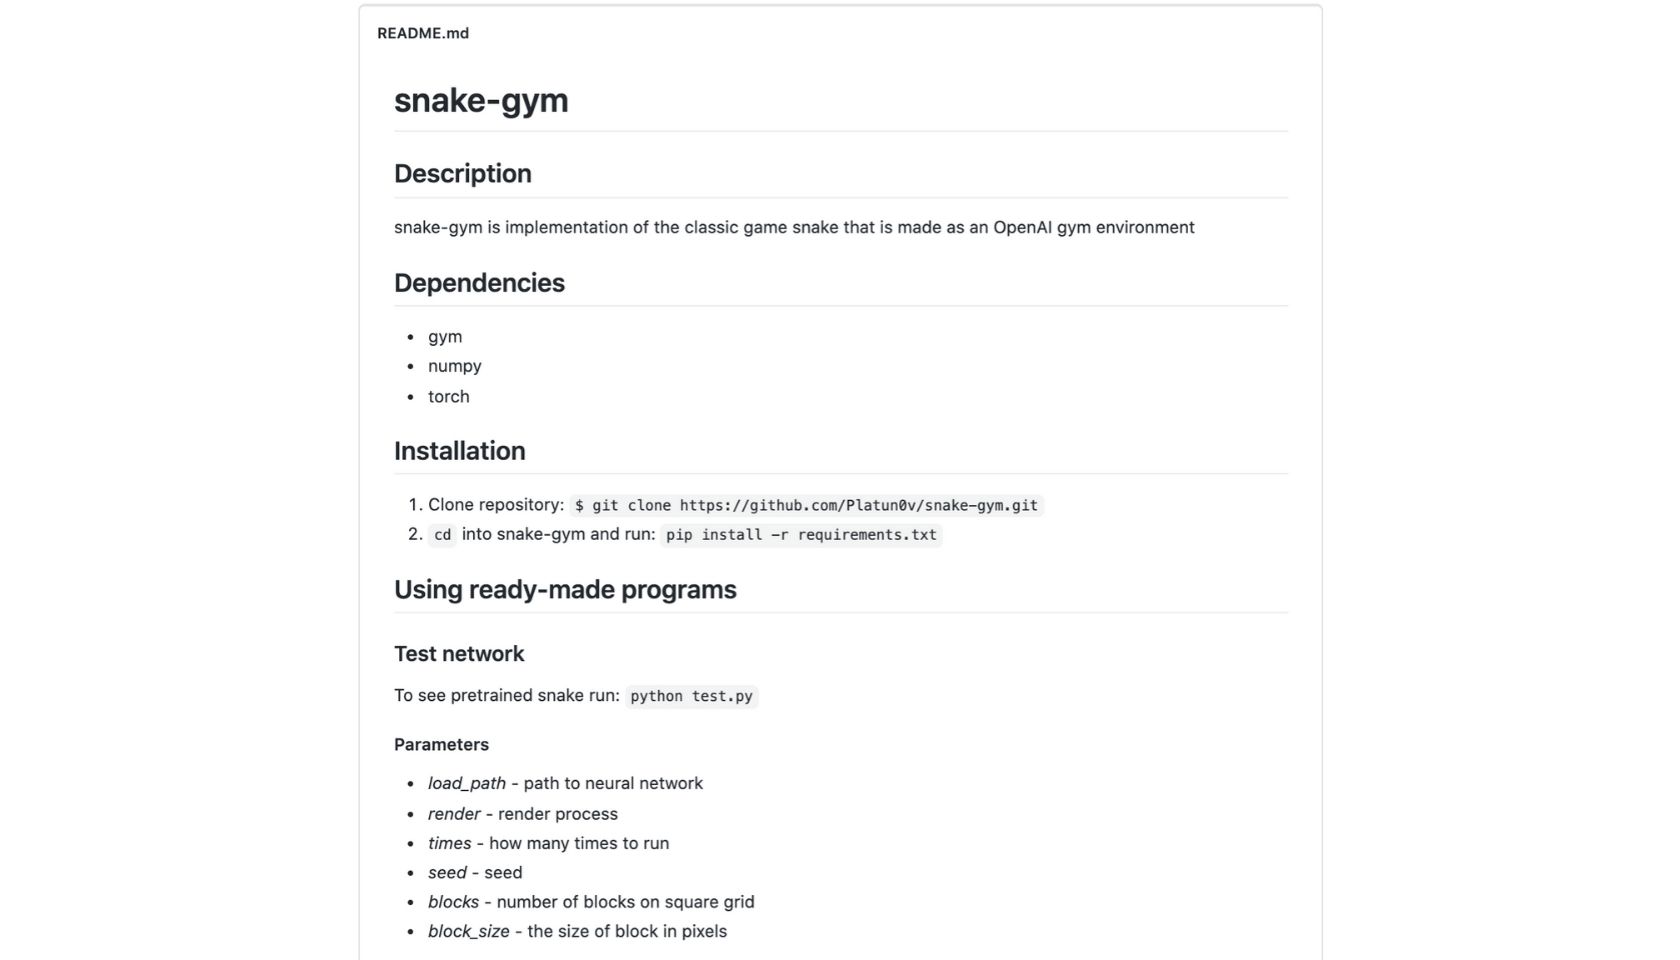 snake-gym